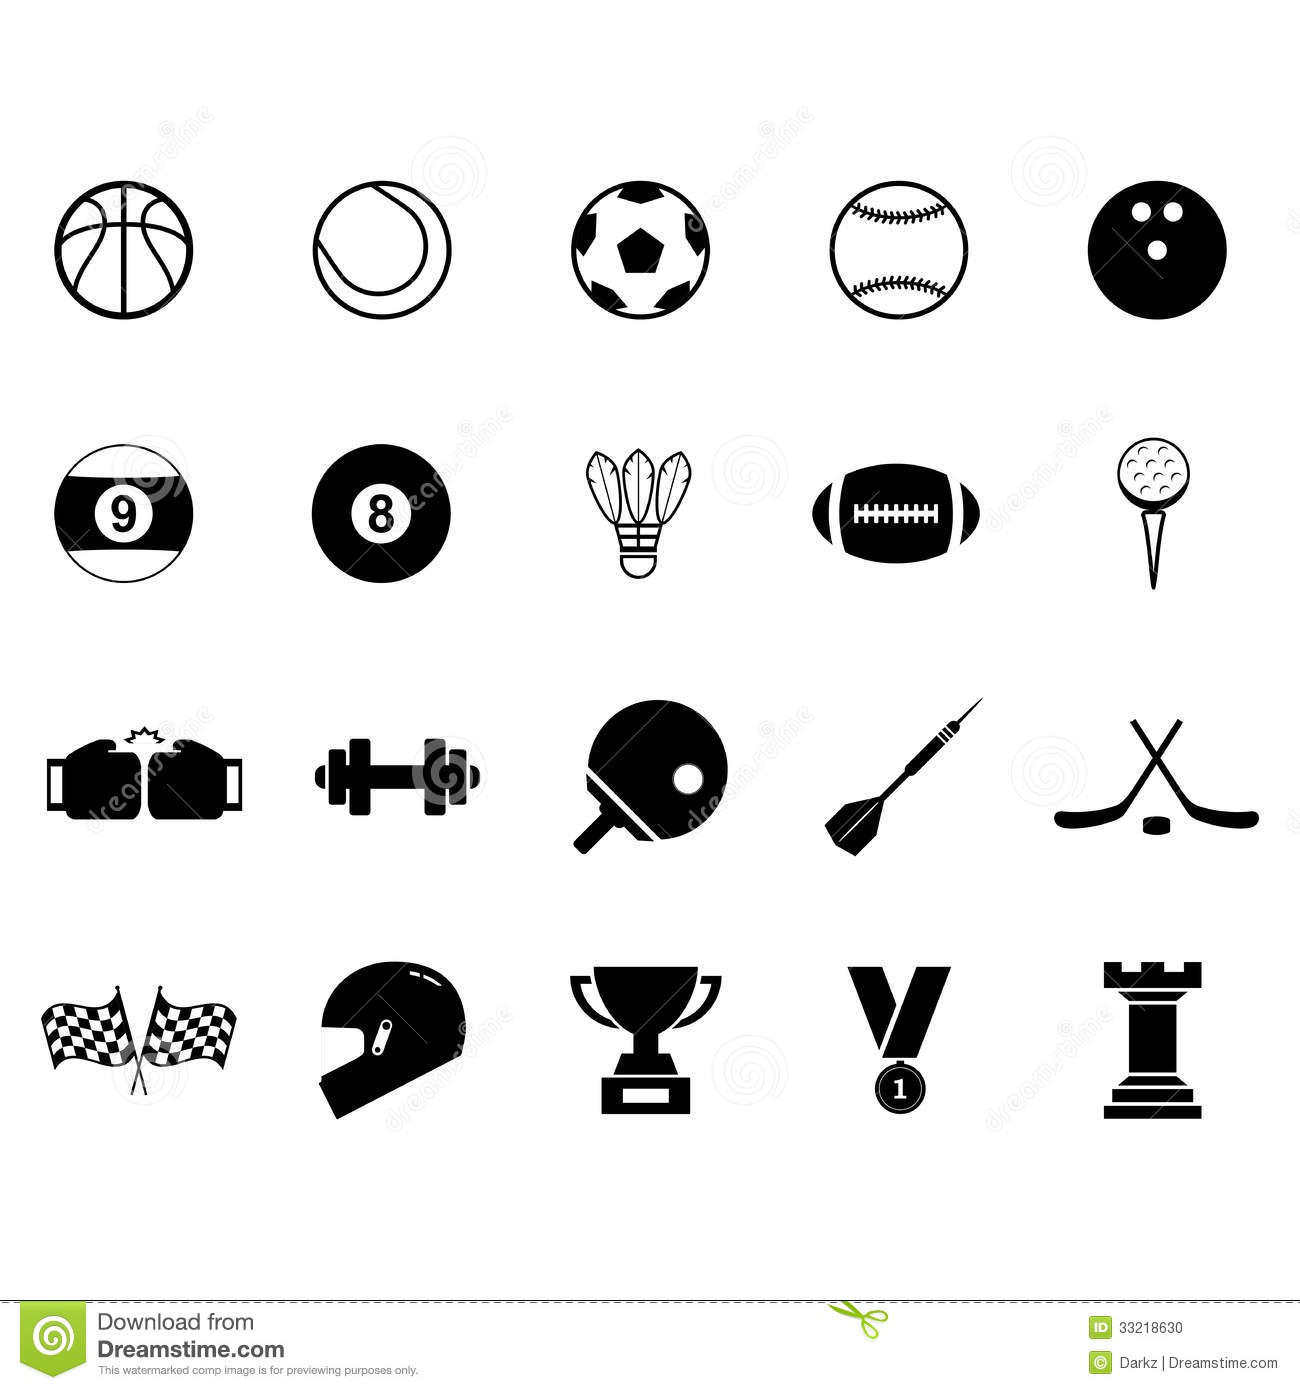 Sport Icon Set